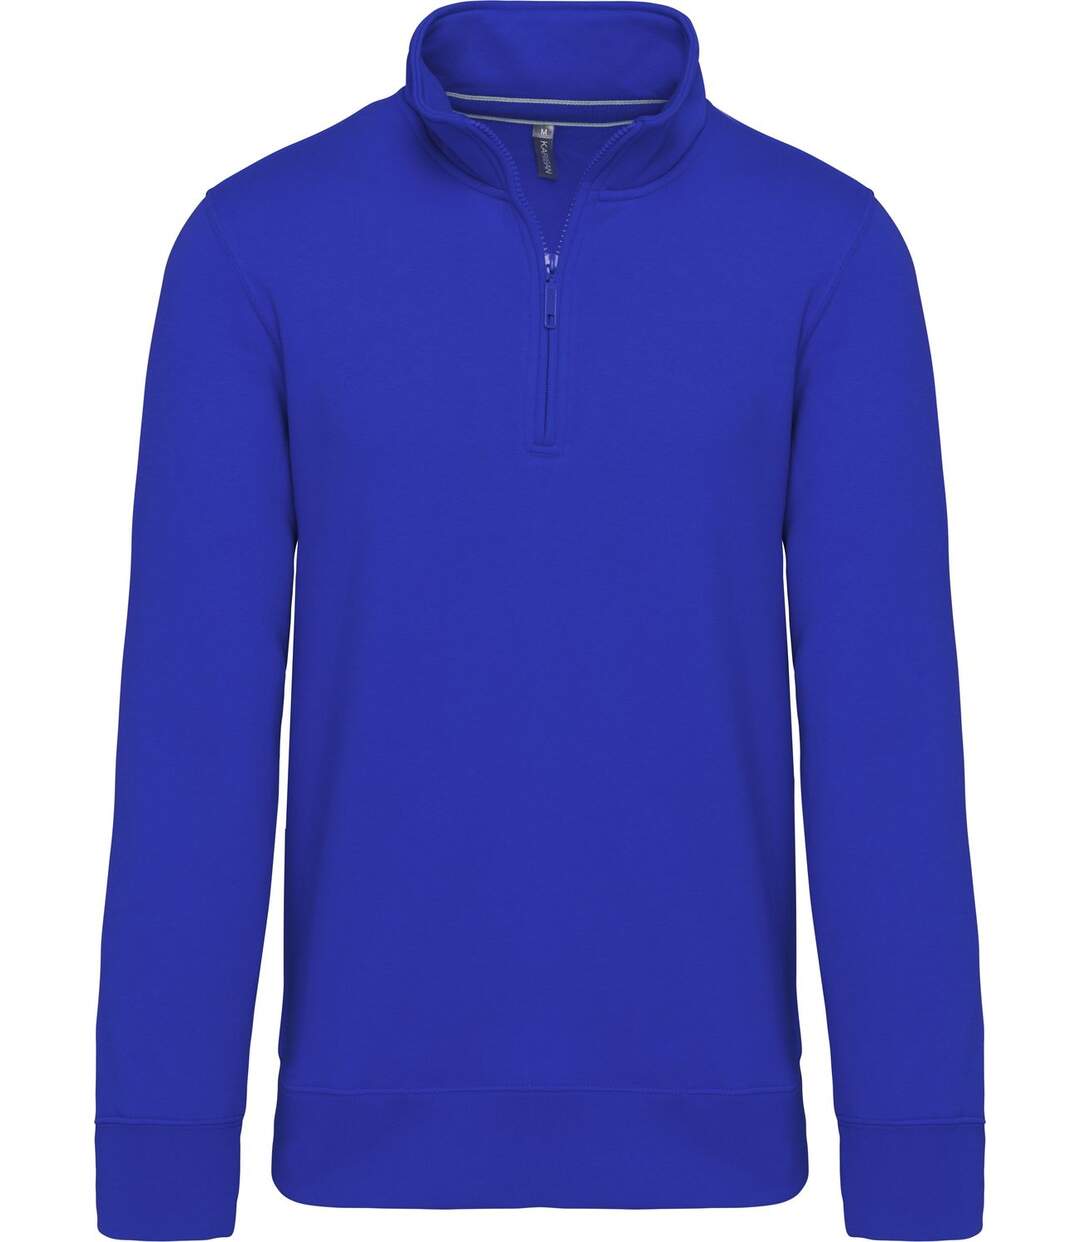 Sweat-shirt col zippé - K487 - bleu roi